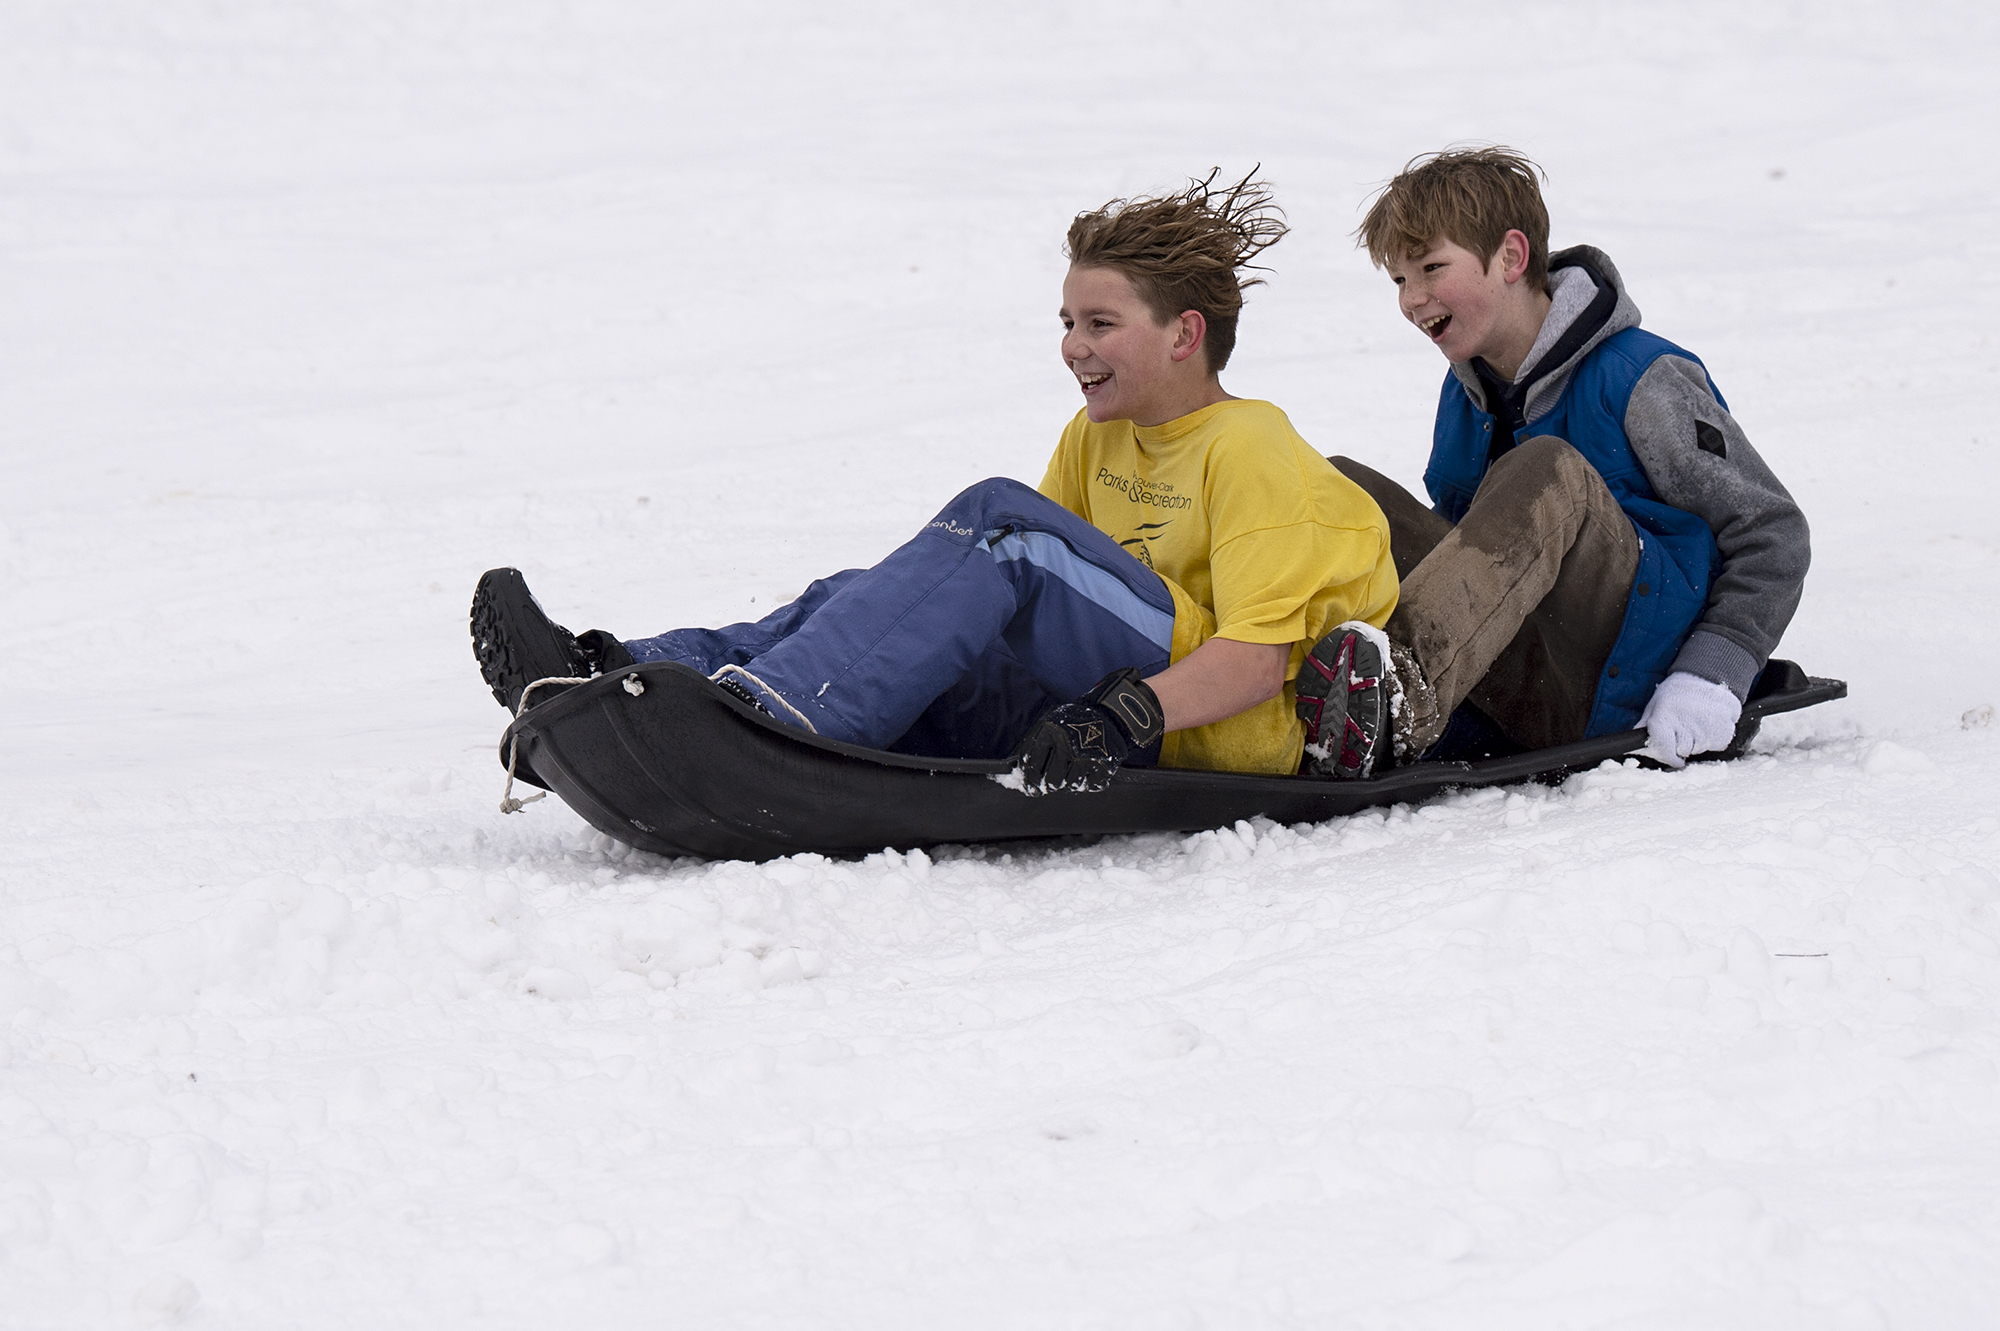 Sorenson Park proves popular sledding destination Saturday